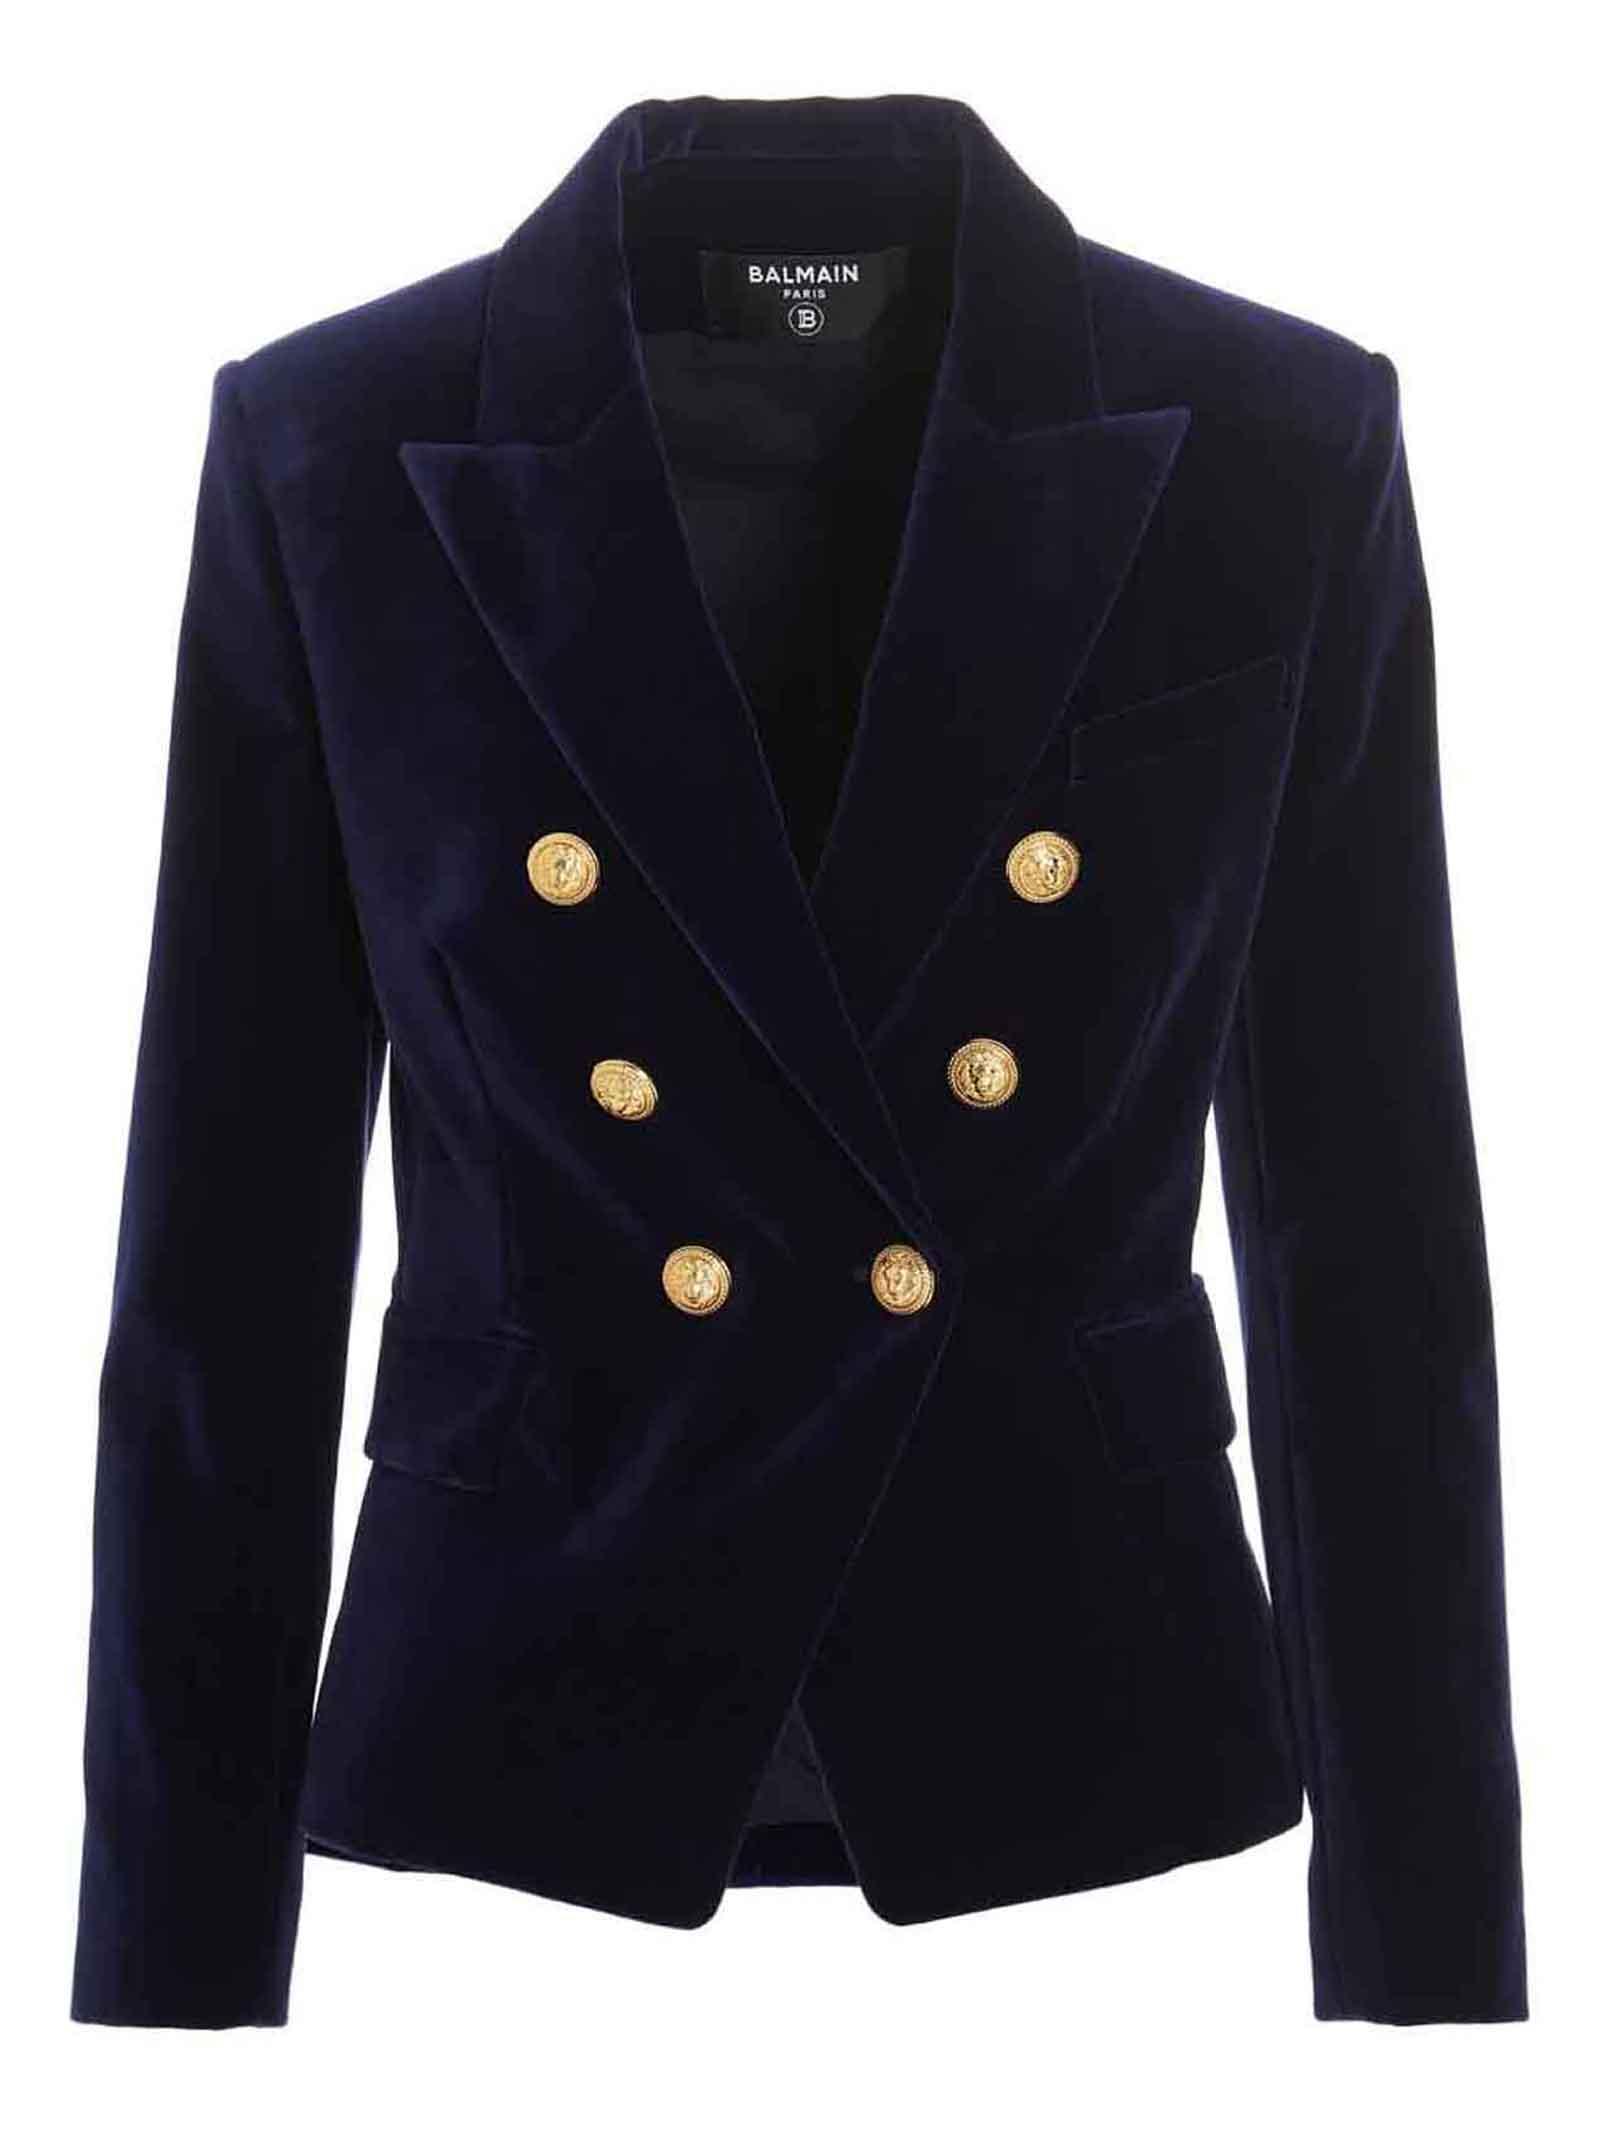 Balmain Velvet Blazer Jacket